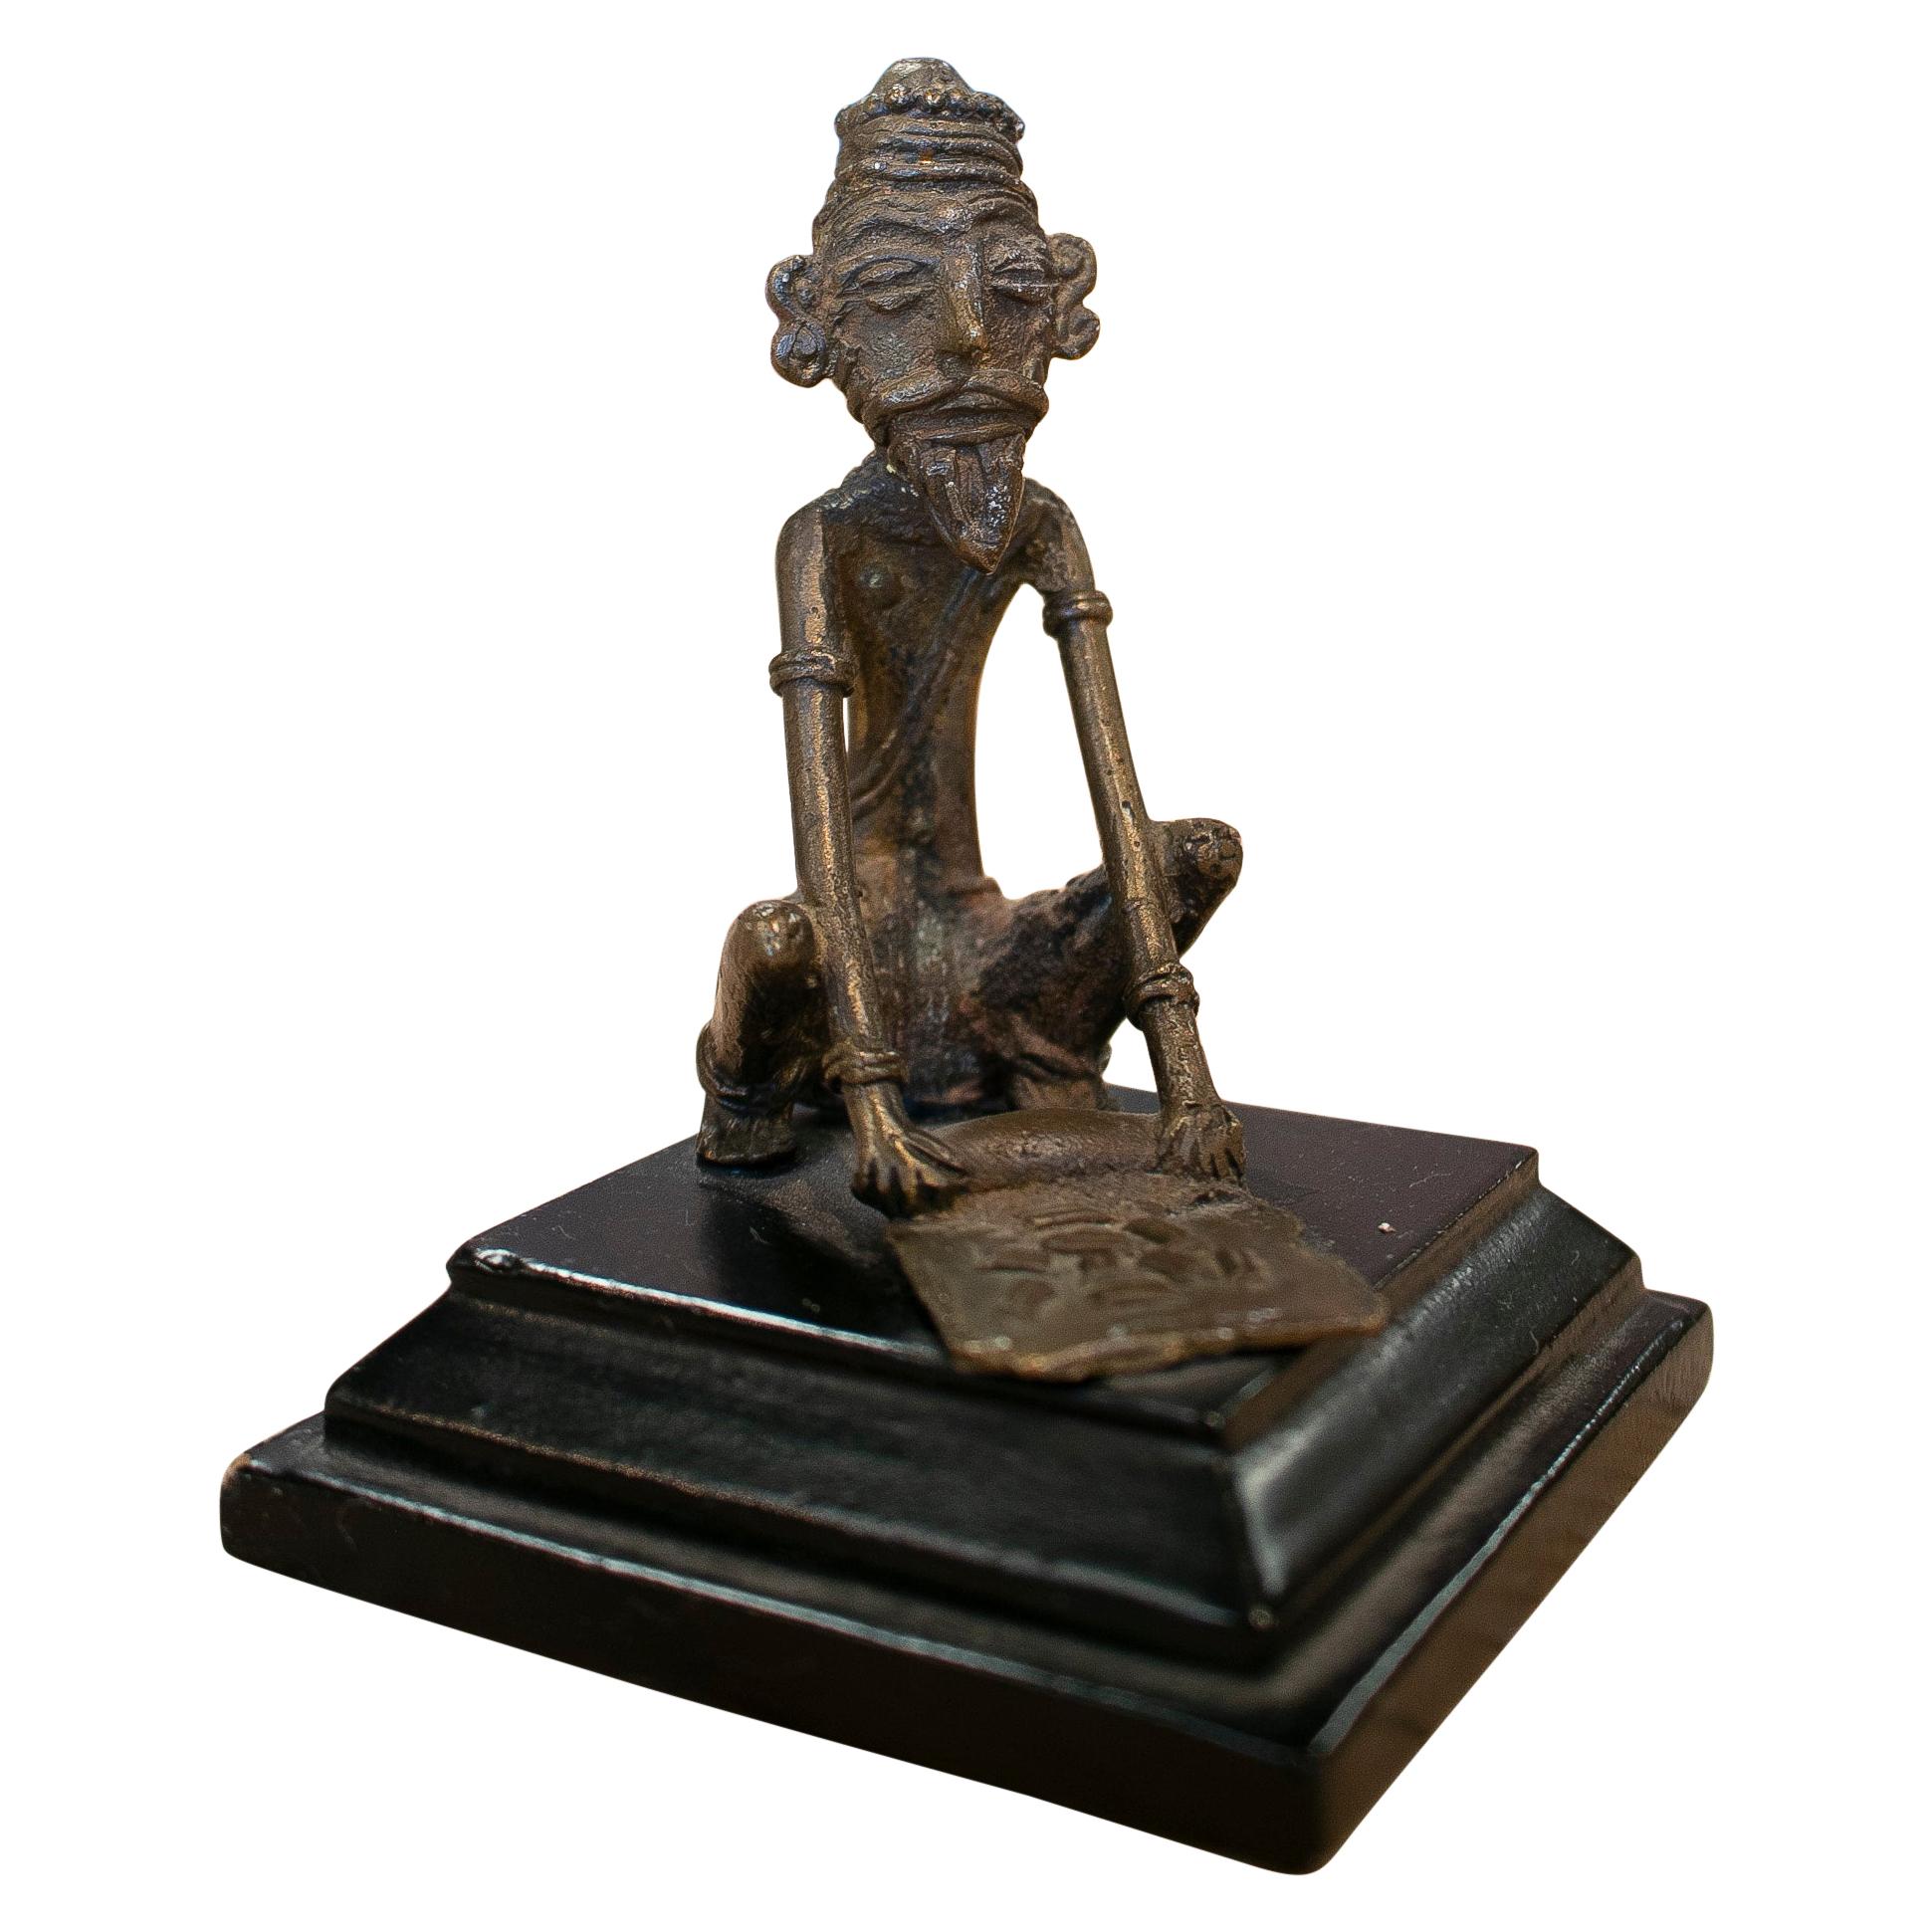 1980s European Sitting Man Bronze Figure Statue w/ Wooden Base For Sale